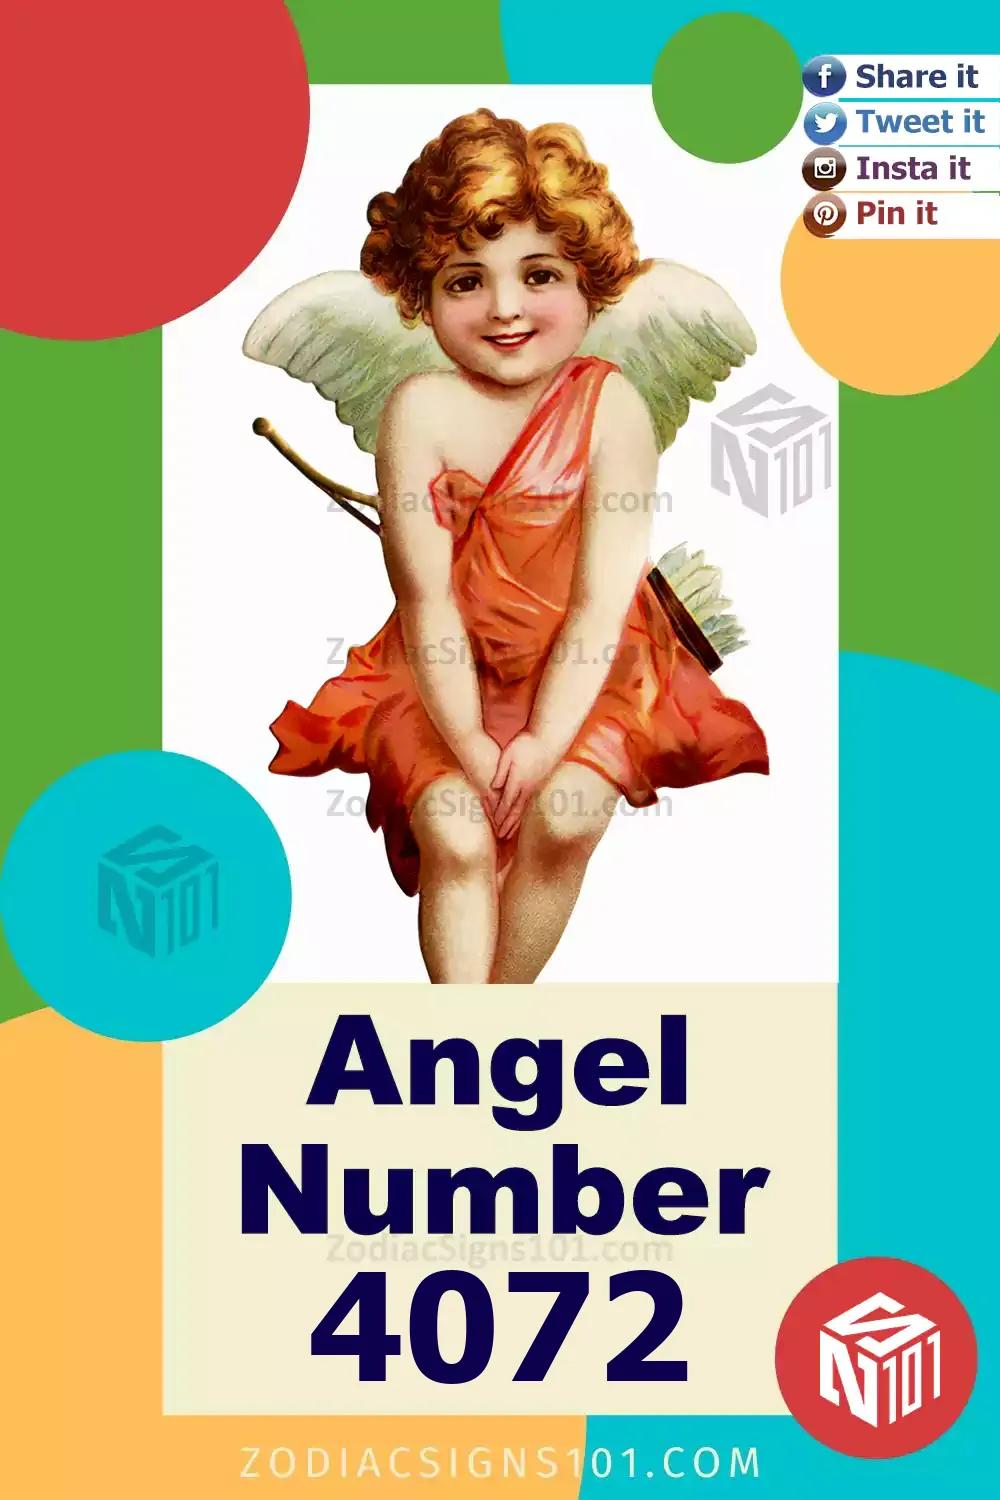 4072-Angel-Number-Meaning.jpg